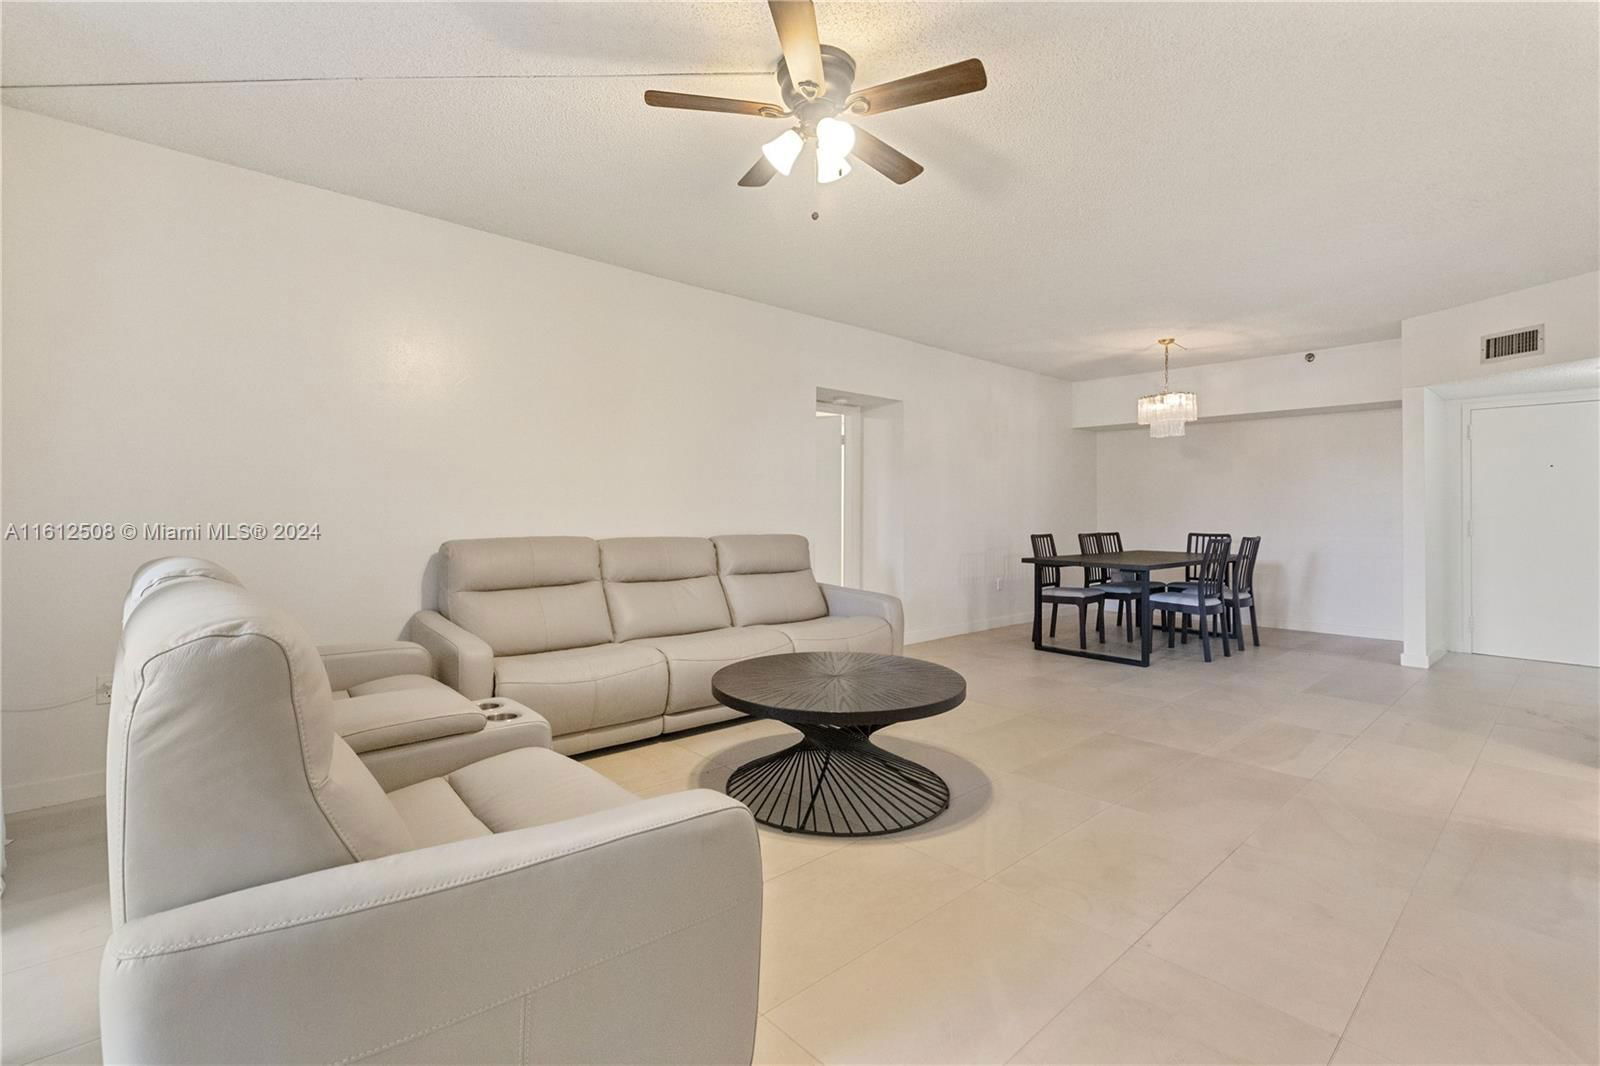 Real estate property located at 900 195th St #113, Miami-Dade County, CHANTILLY CONDO, Miami, FL